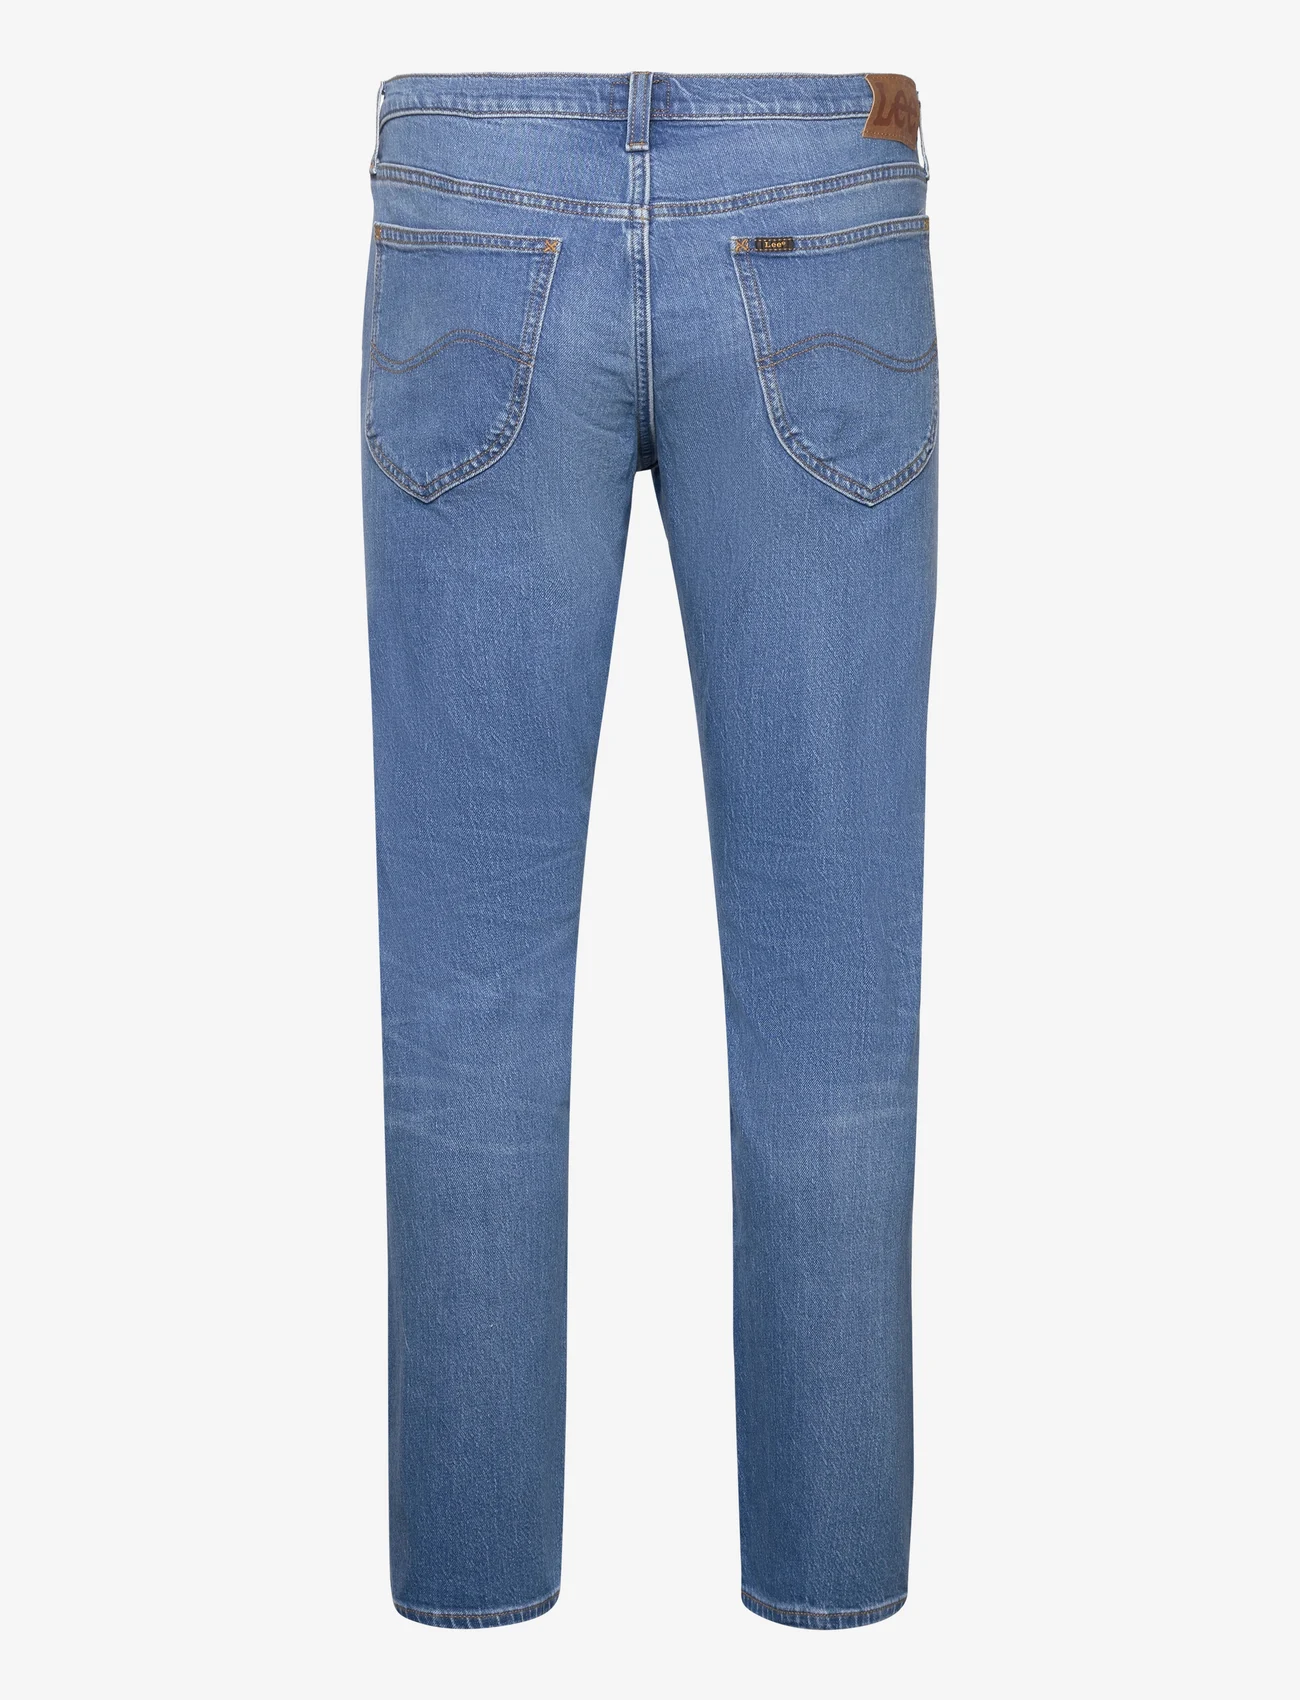 Lee Jeans - DAREN ZIP FLY - Įprasto kirpimo džinsai - indigo vintage - 1